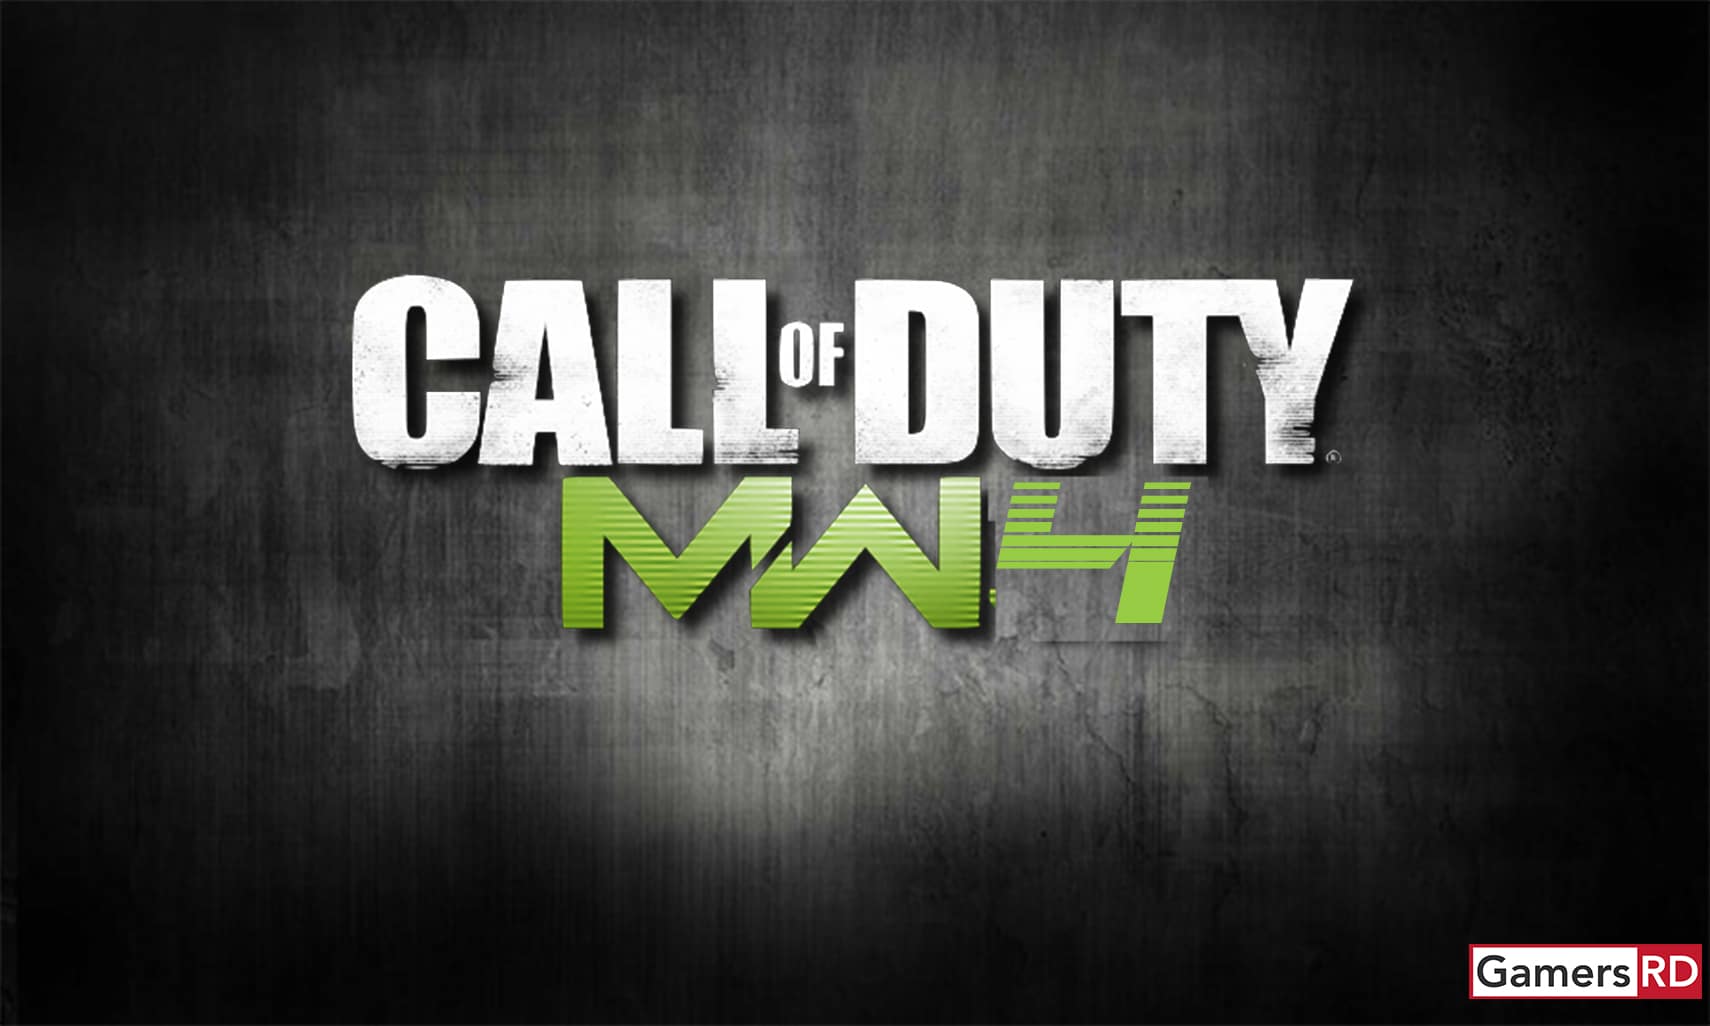 Call of Duty, Modern Warfare 4, Activision, Infinity ward, GamersRD